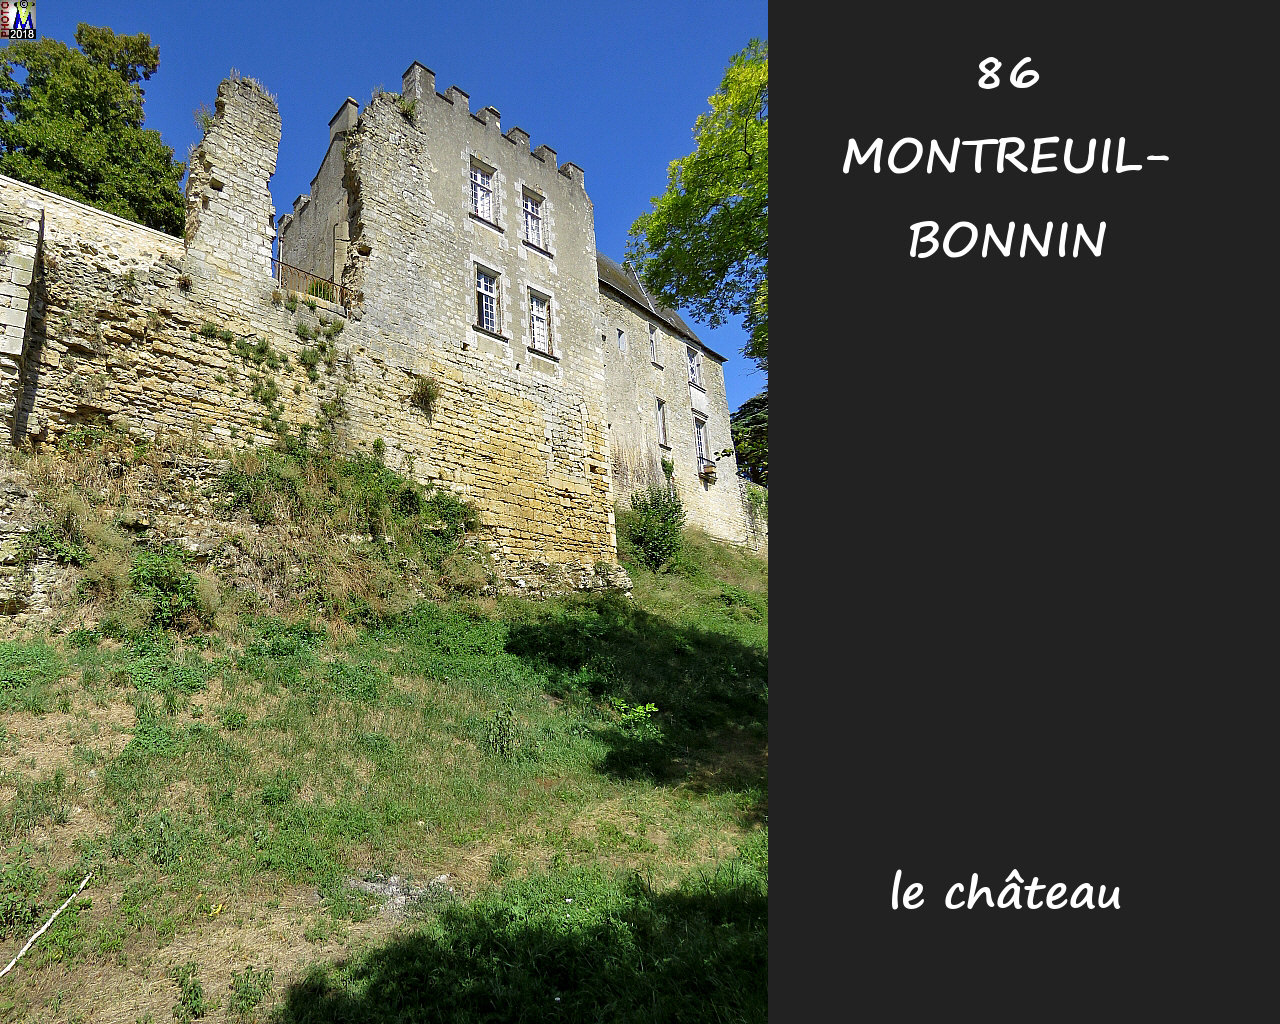 86MONTREUIL-BONNIN_chateau_1018.jpg